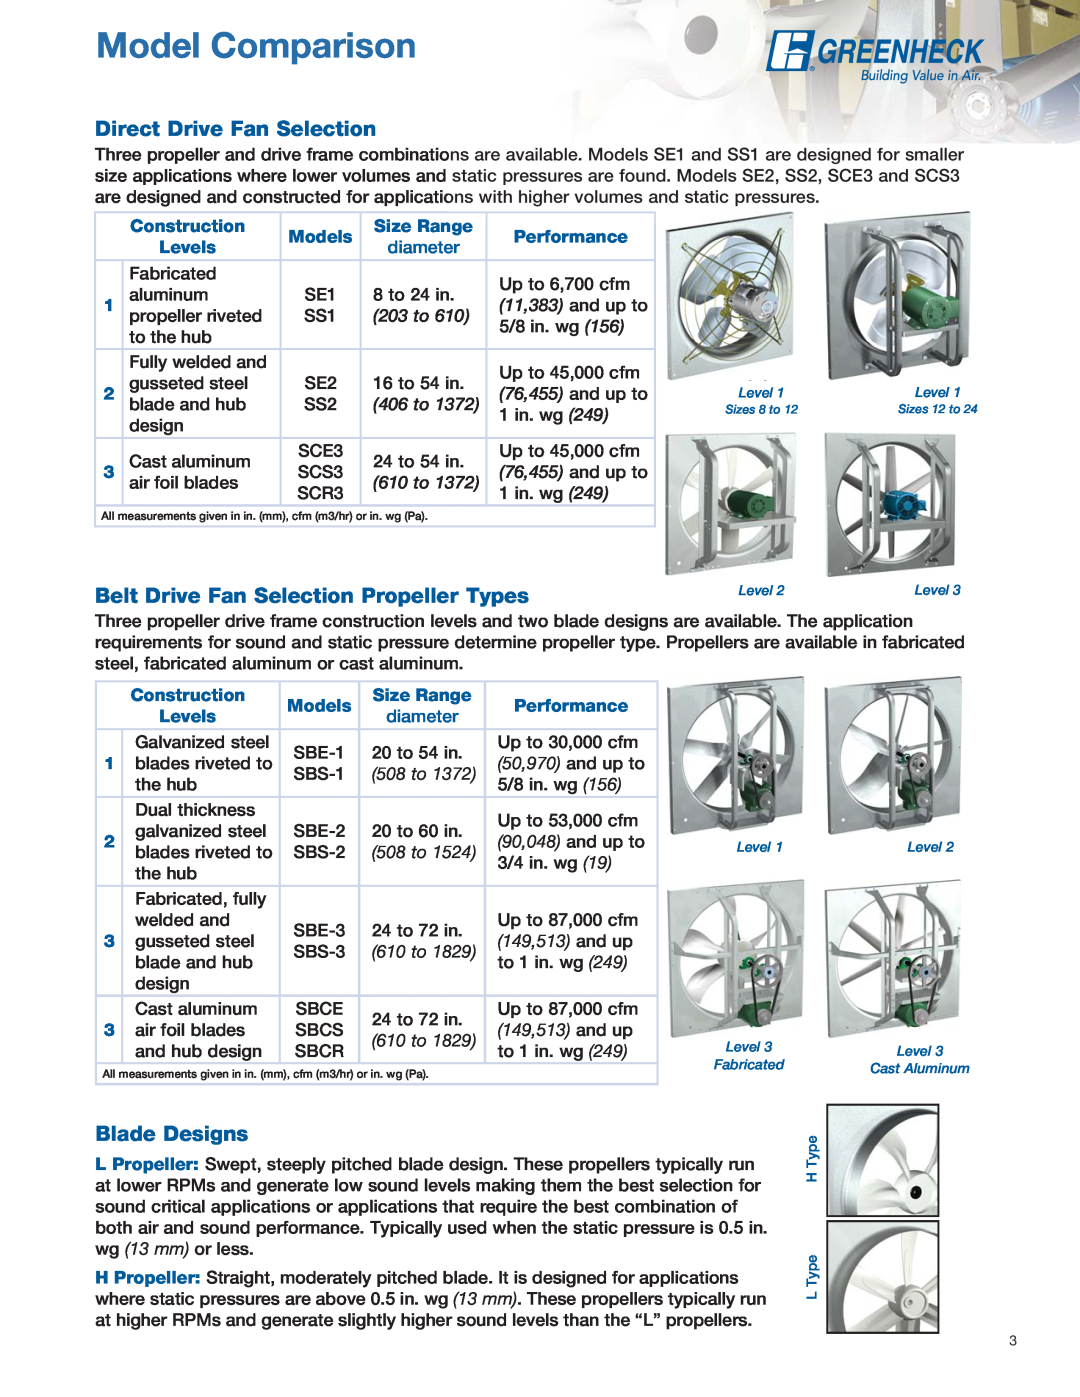 Greenheck Fan SE1 Model Comparison, Direct Drive Fan Selection, Belt Drive Fan Selection Propeller Types, Blade Designs 